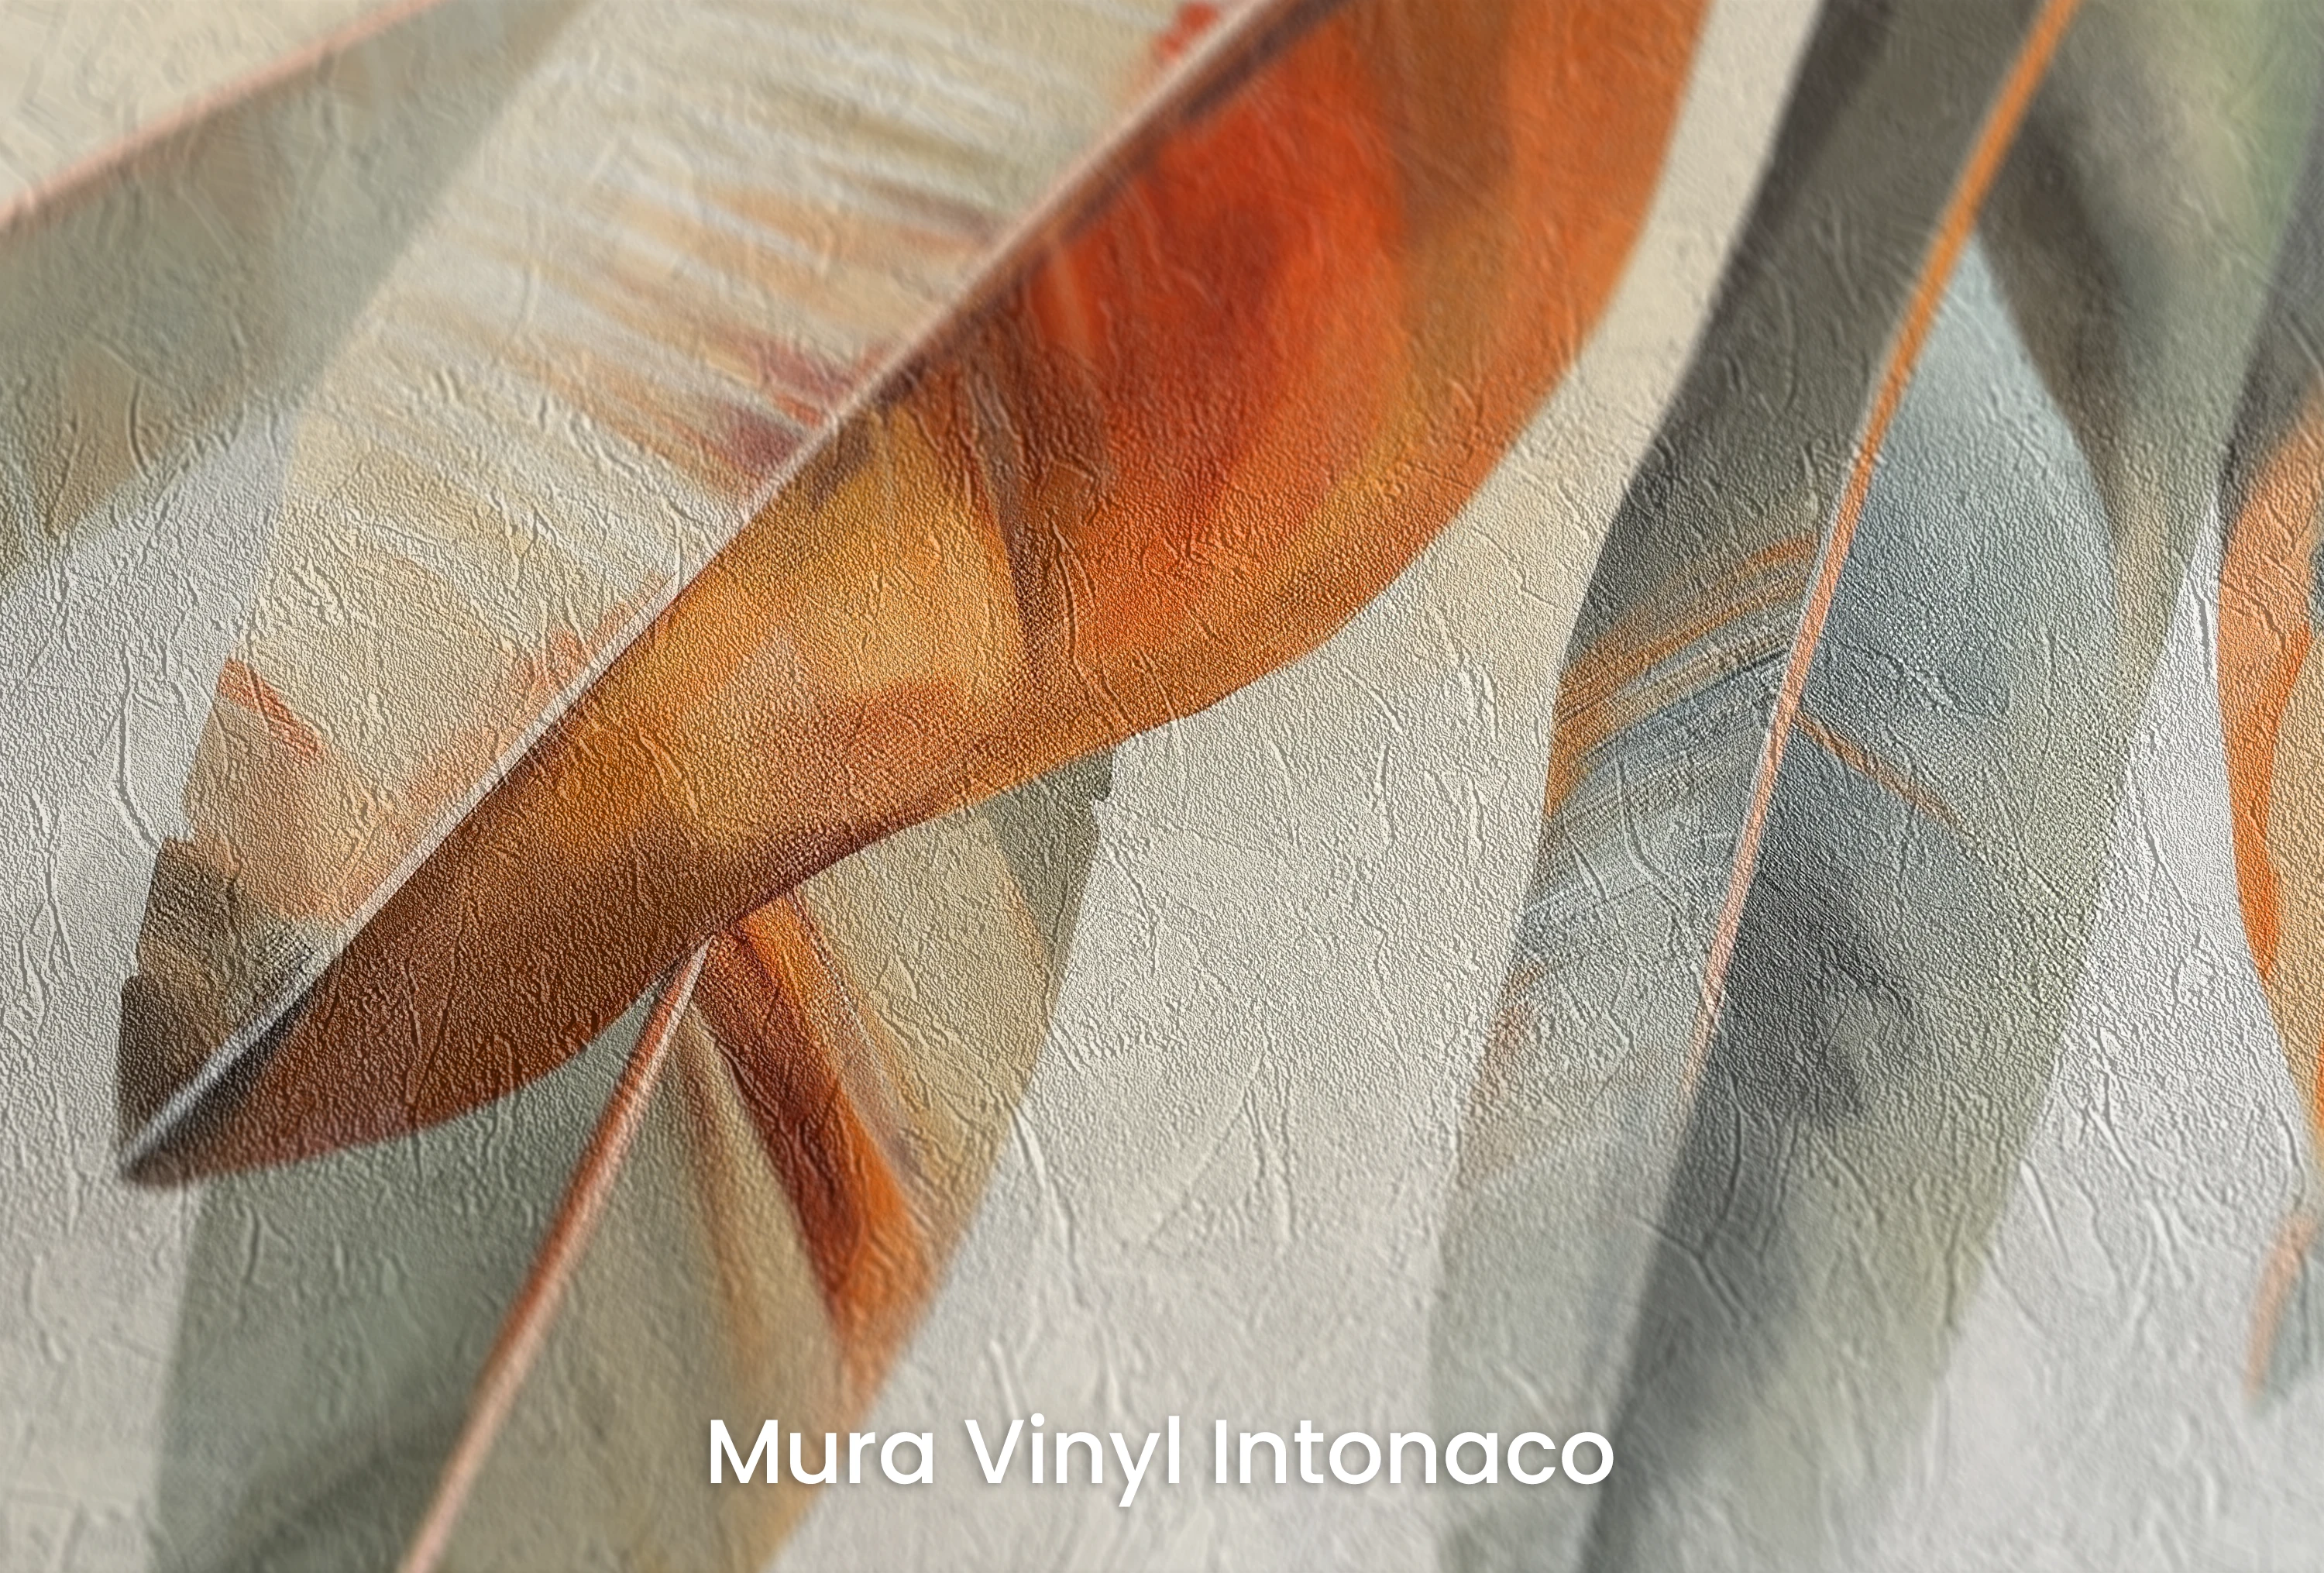 Photo wallpaper pattern printed on "Mura Vinyl Intonaco" substrate